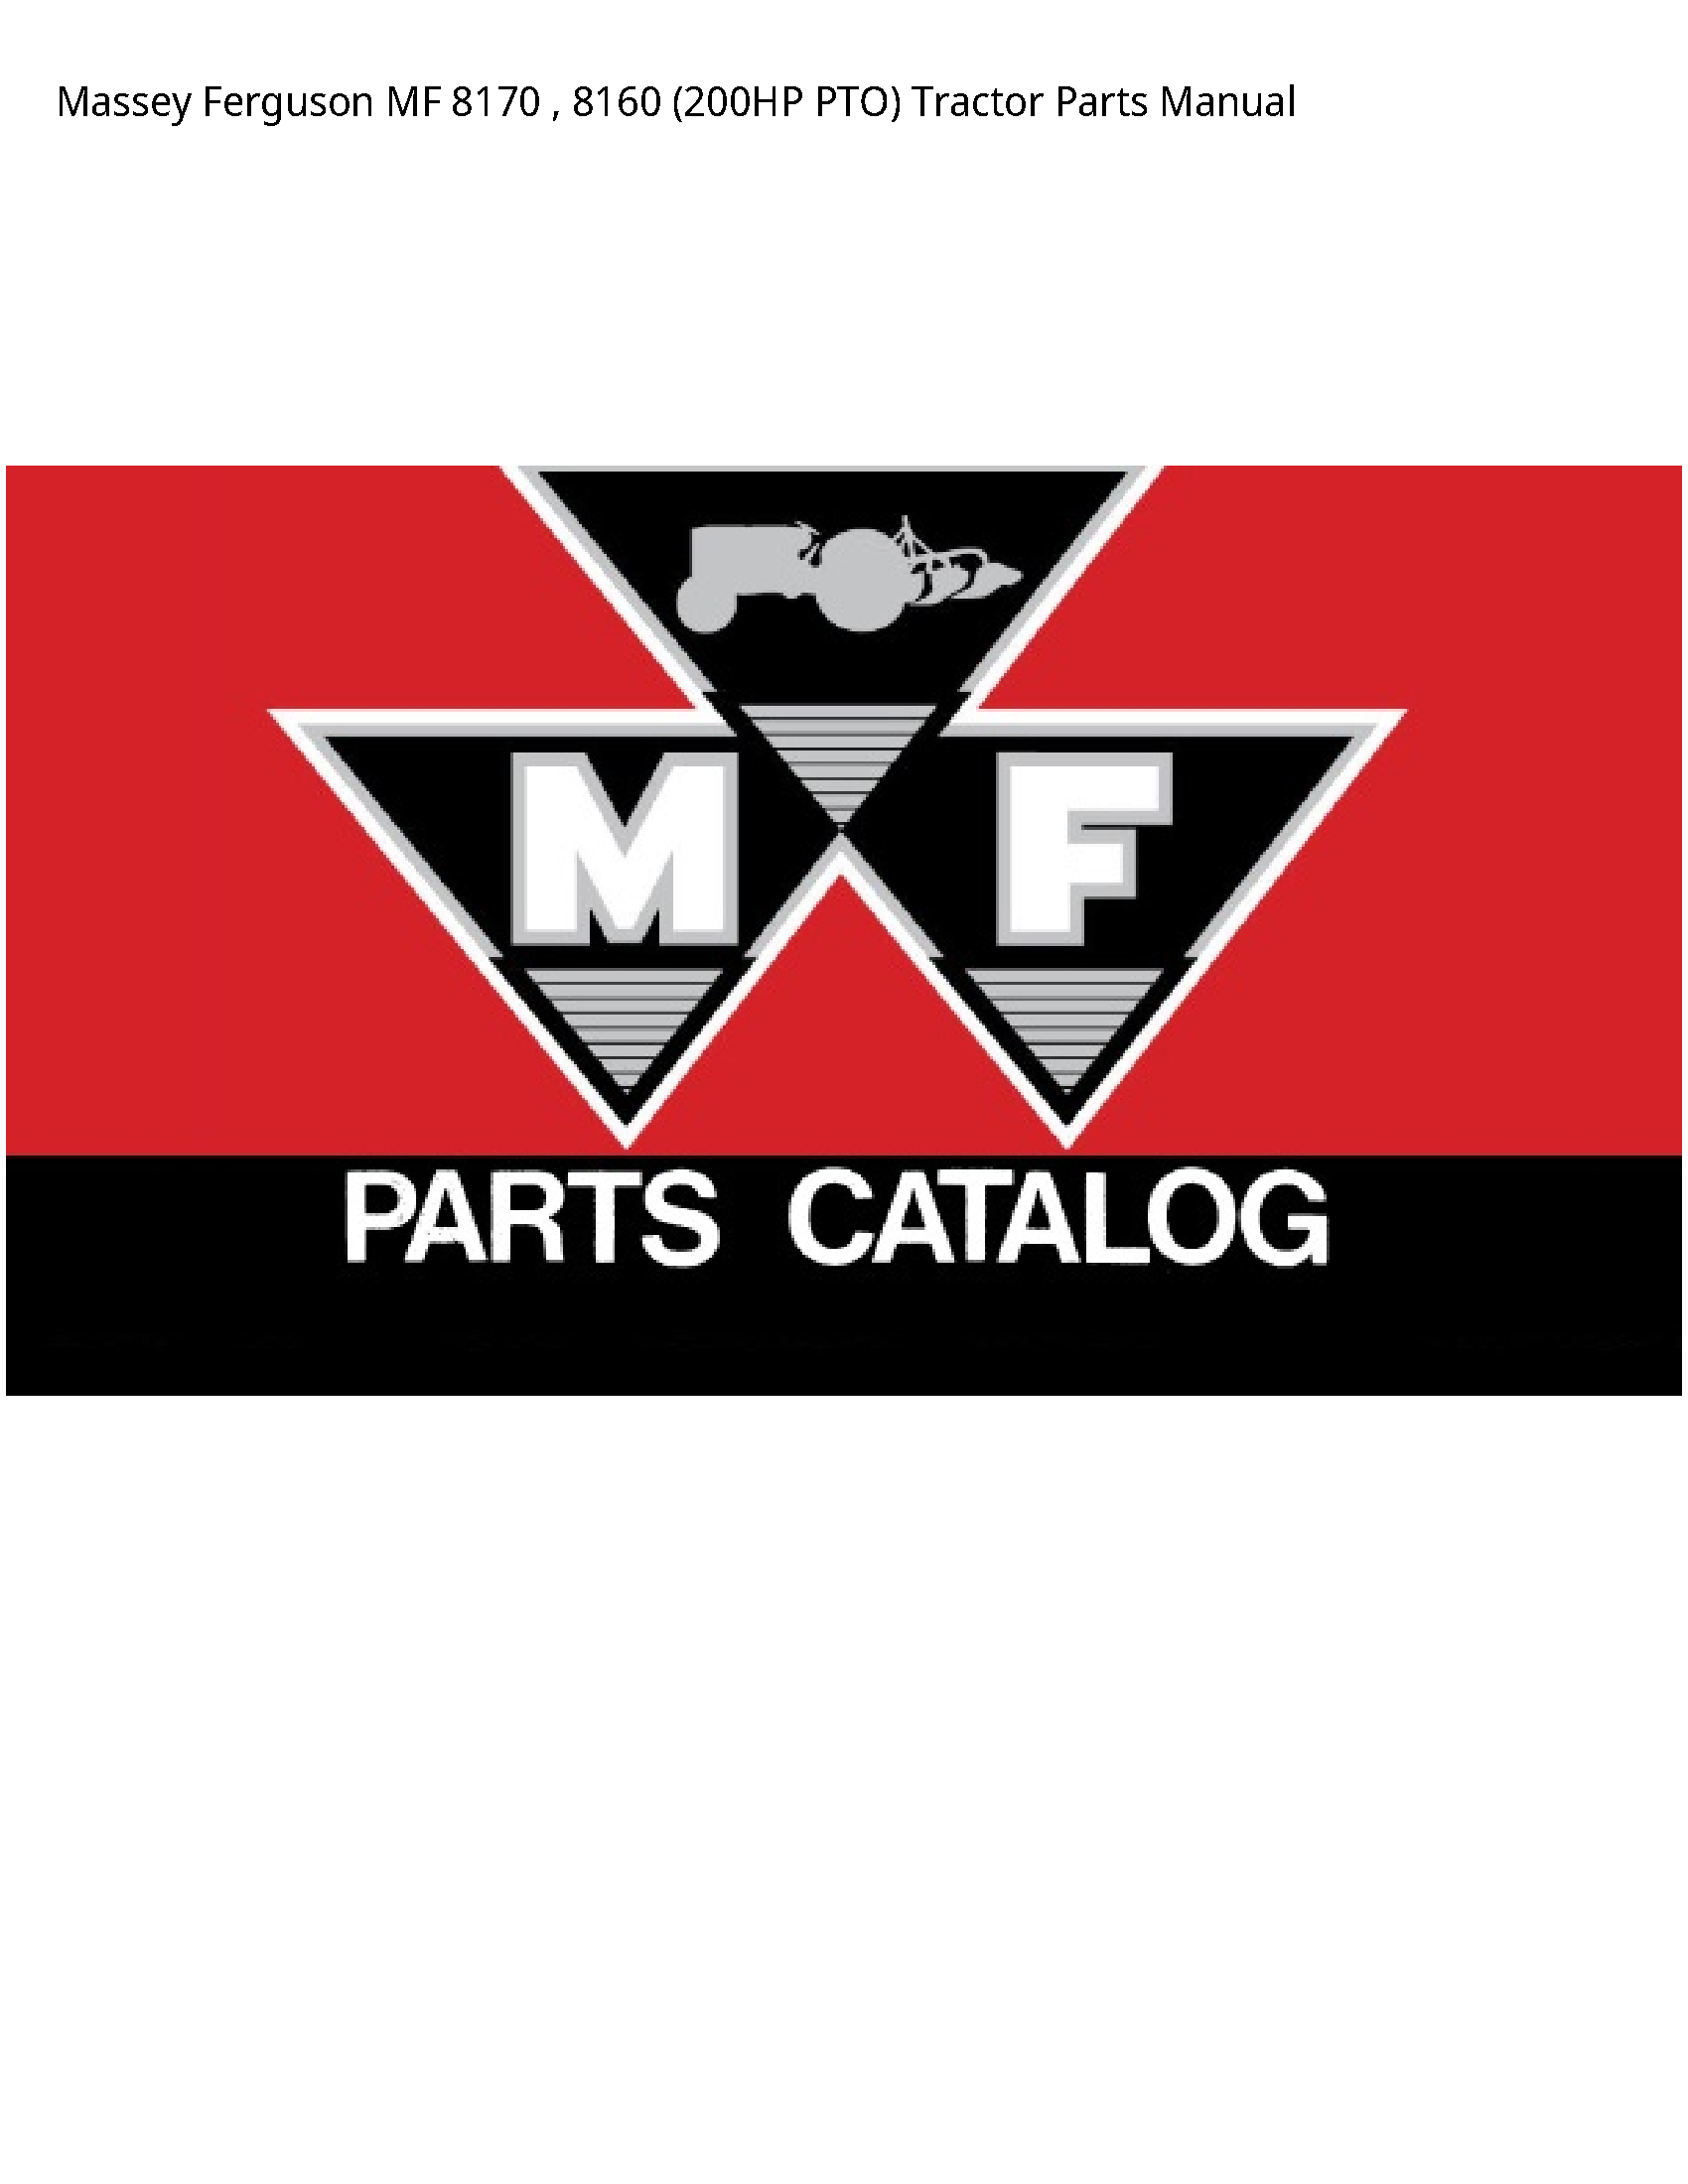 Massey Ferguson 8170 MF PTO) Tractor Parts manual